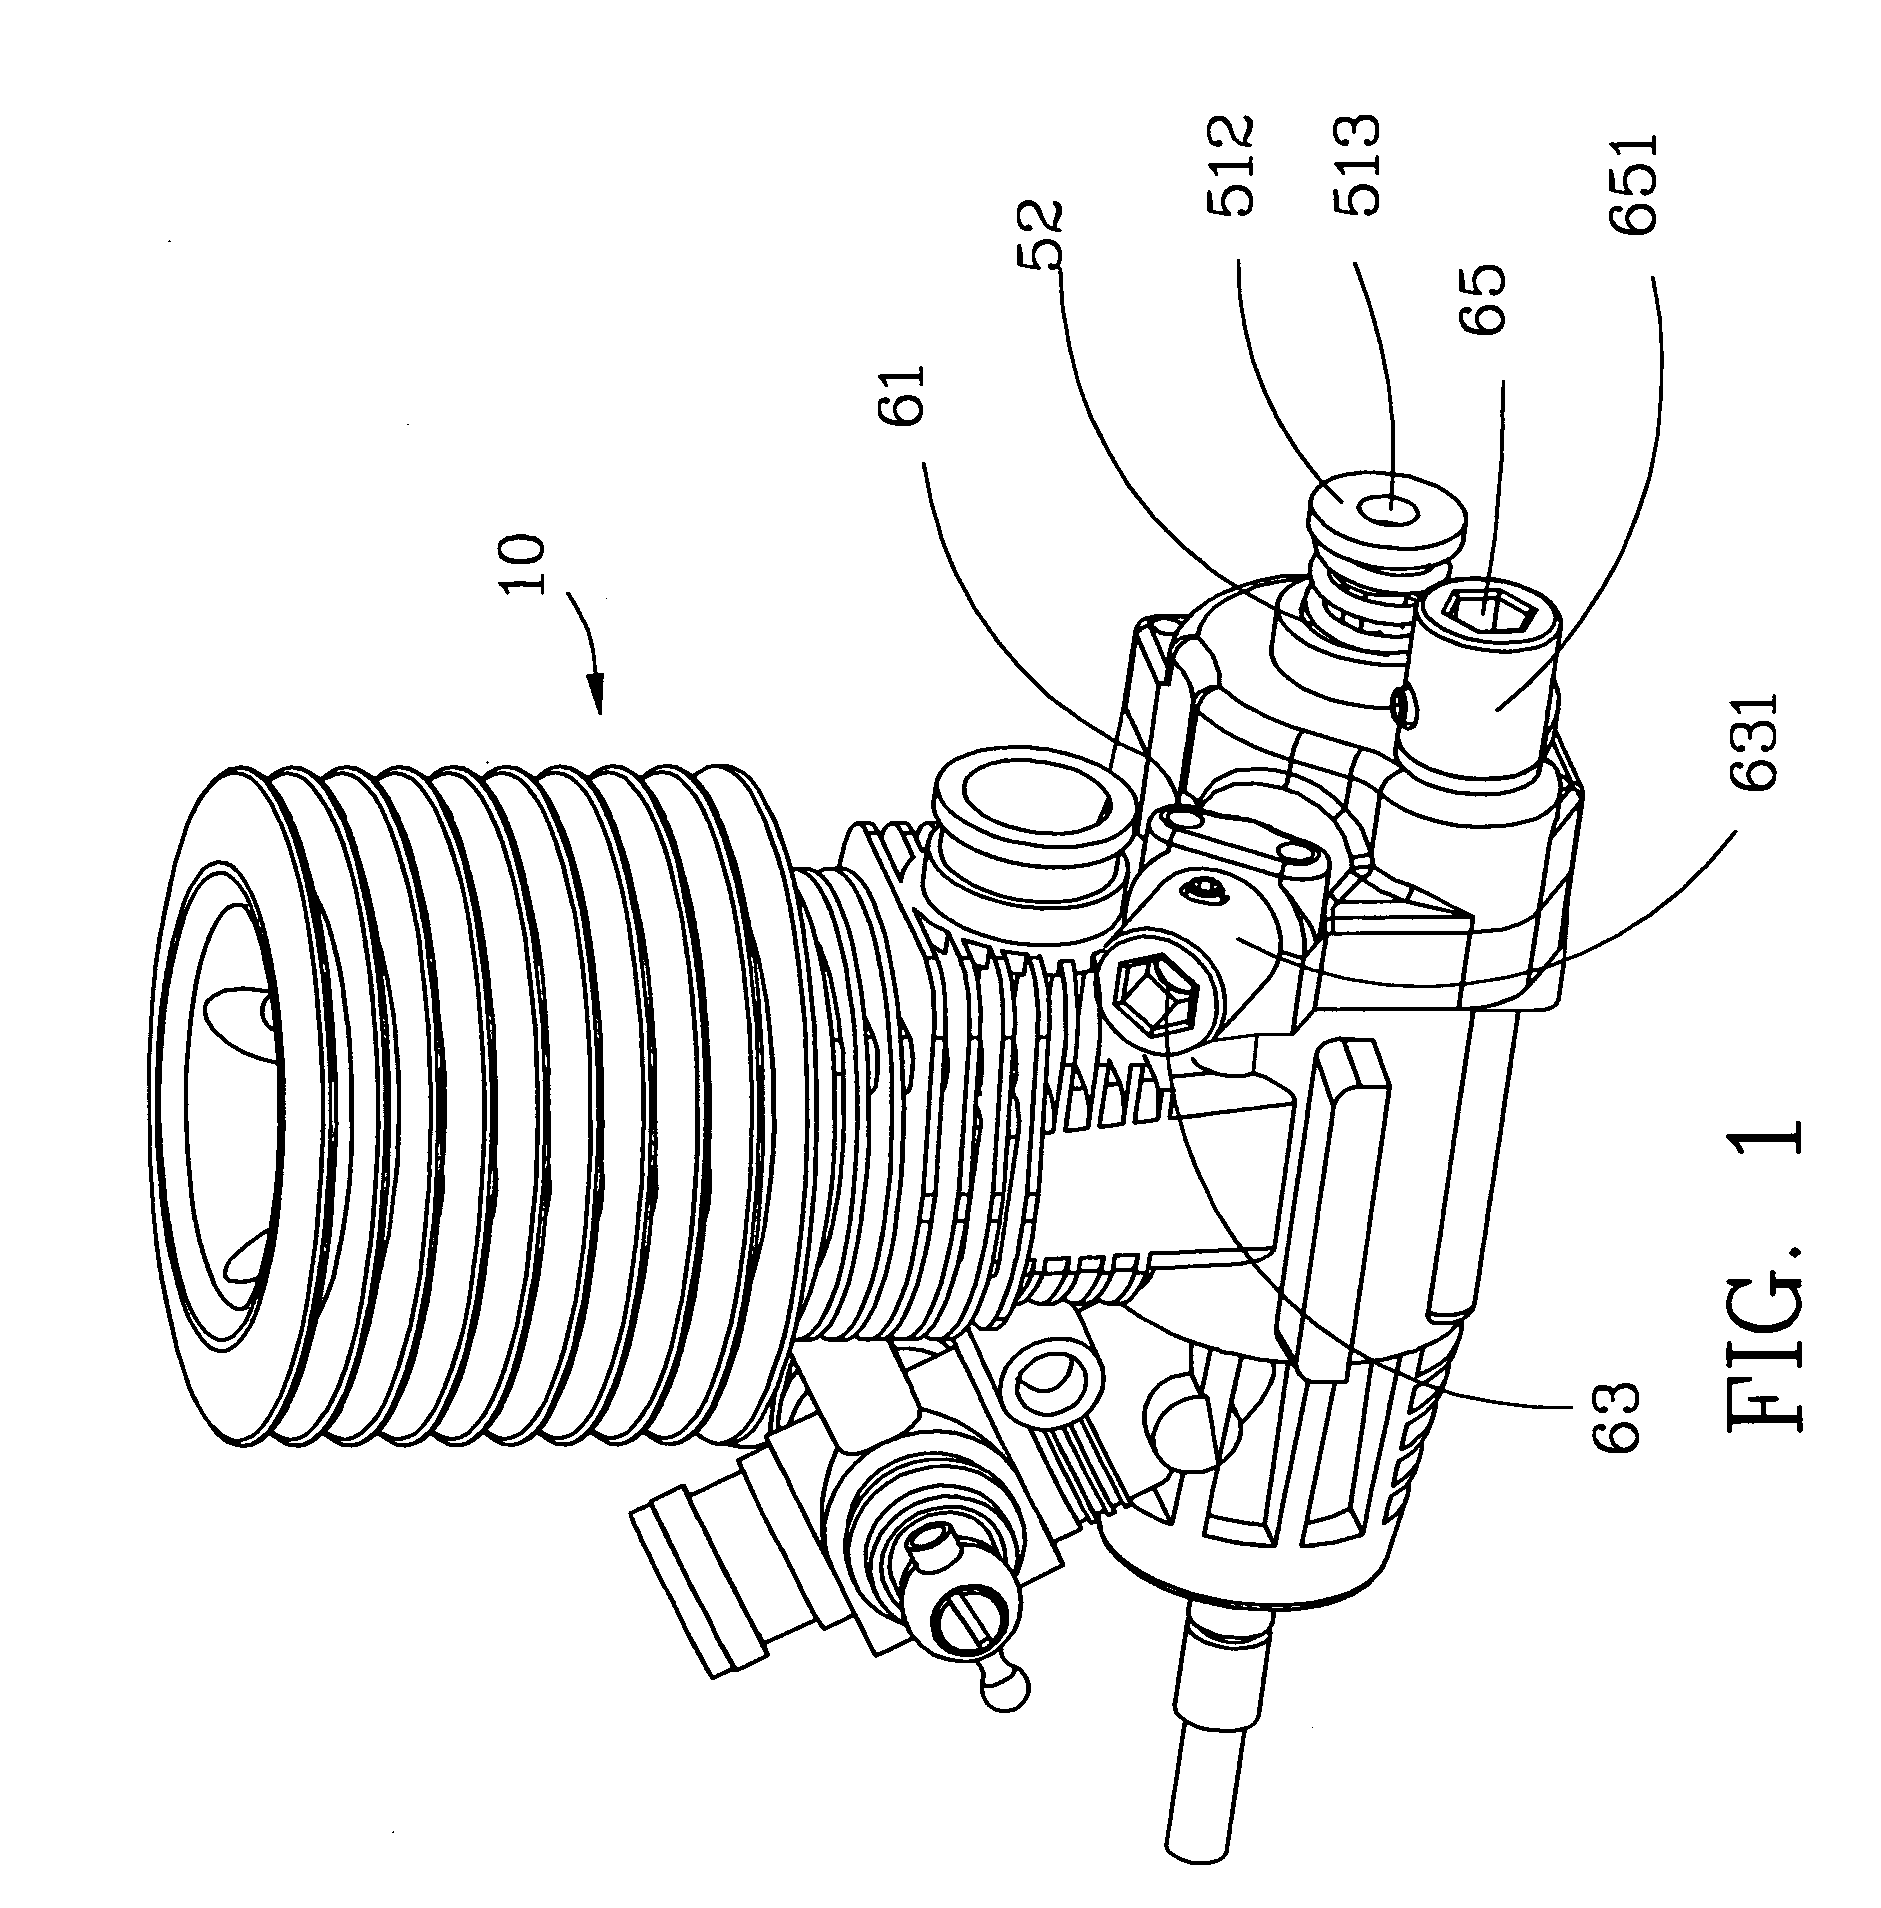 Engine starter for a radio control model